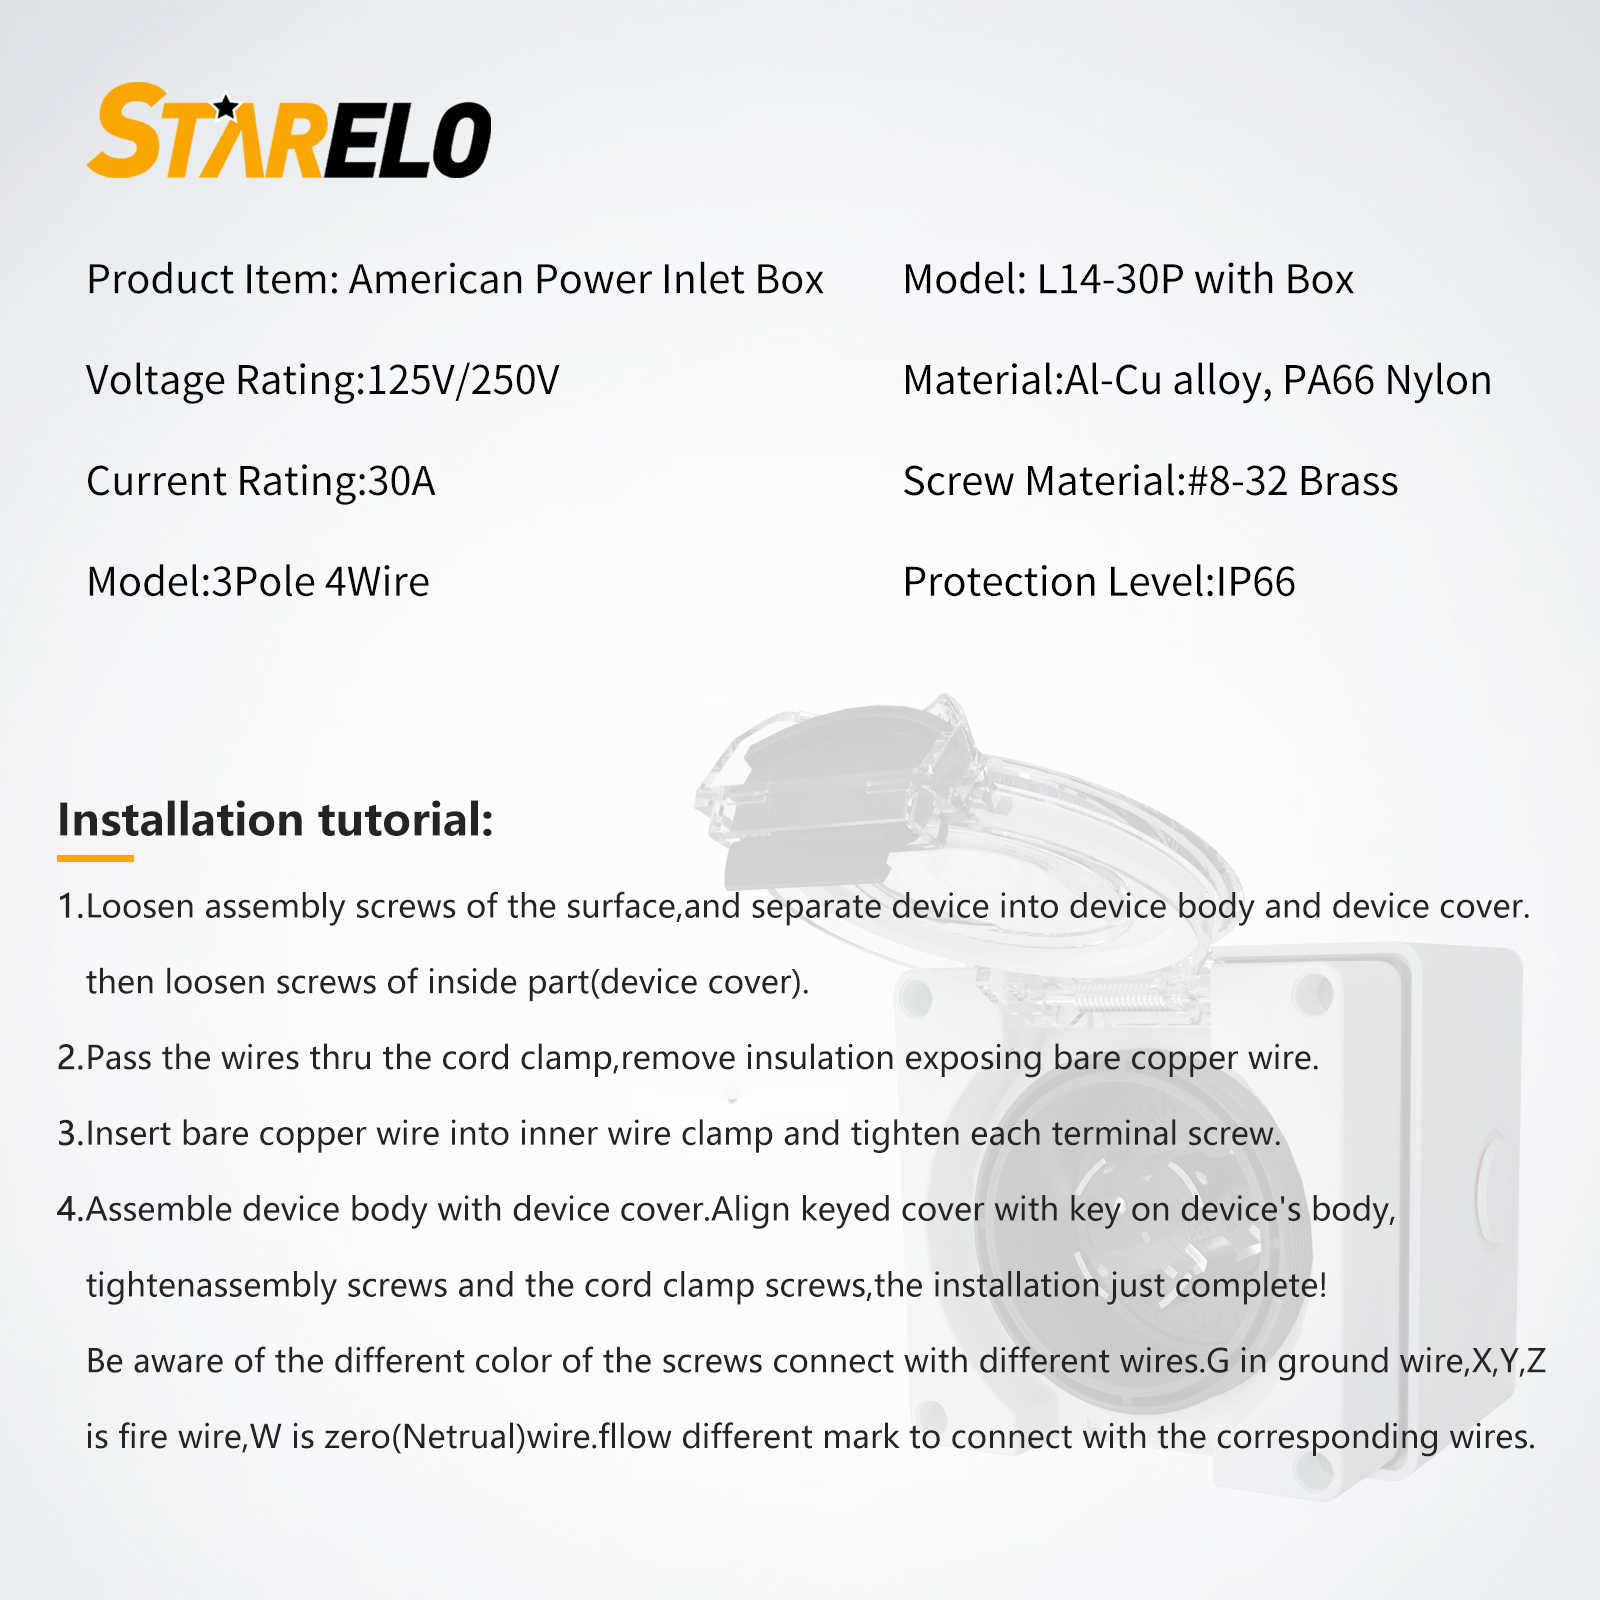 NEMA L14-30P 30Amp Locking Female Plug Box specification and installation tutorials